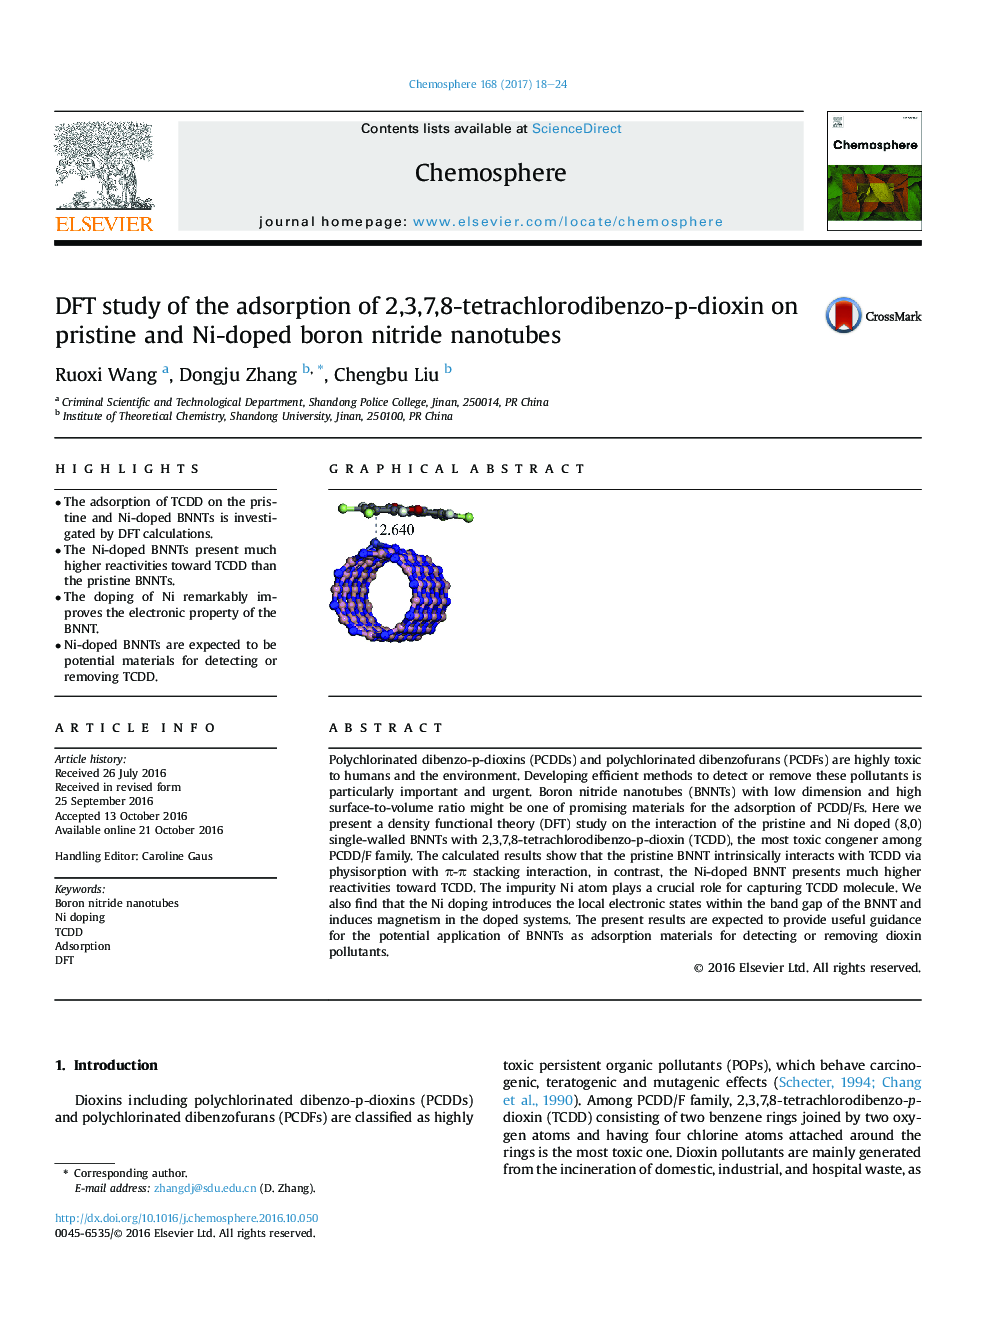 DFT study of the adsorption of 2,3,7,8-tetrachlorodibenzo-p-dioxin on pristine and Ni-doped boron nitride nanotubes